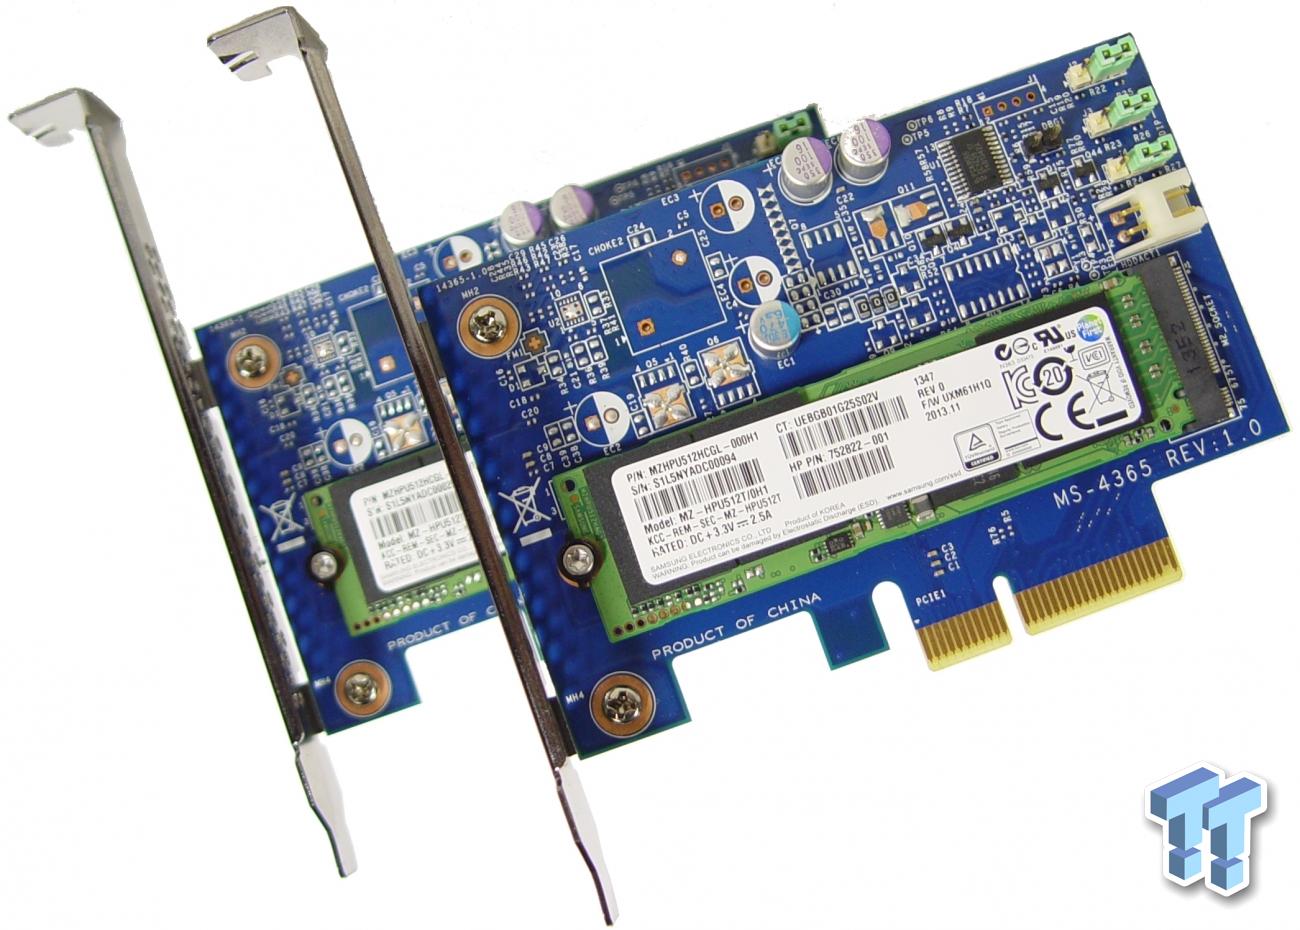 Book Pedagogy Absolutely HP Z Turbo 512GB PCIe SSD Review - With RAID 0 Numbers | TweakTown